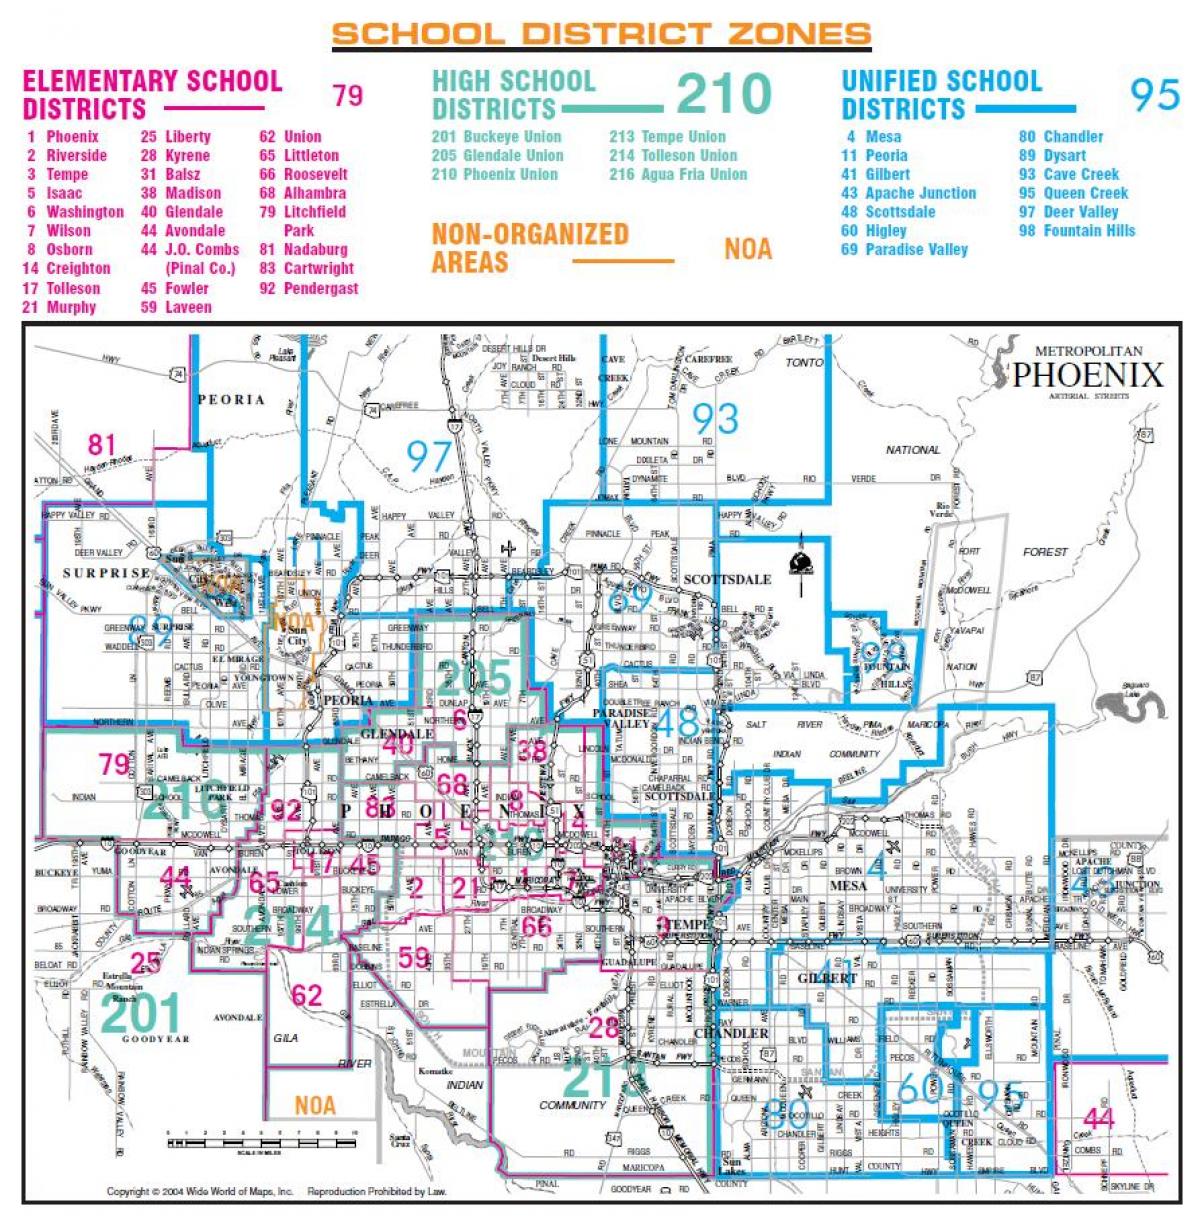 Phoenix union high school barrutia mapa